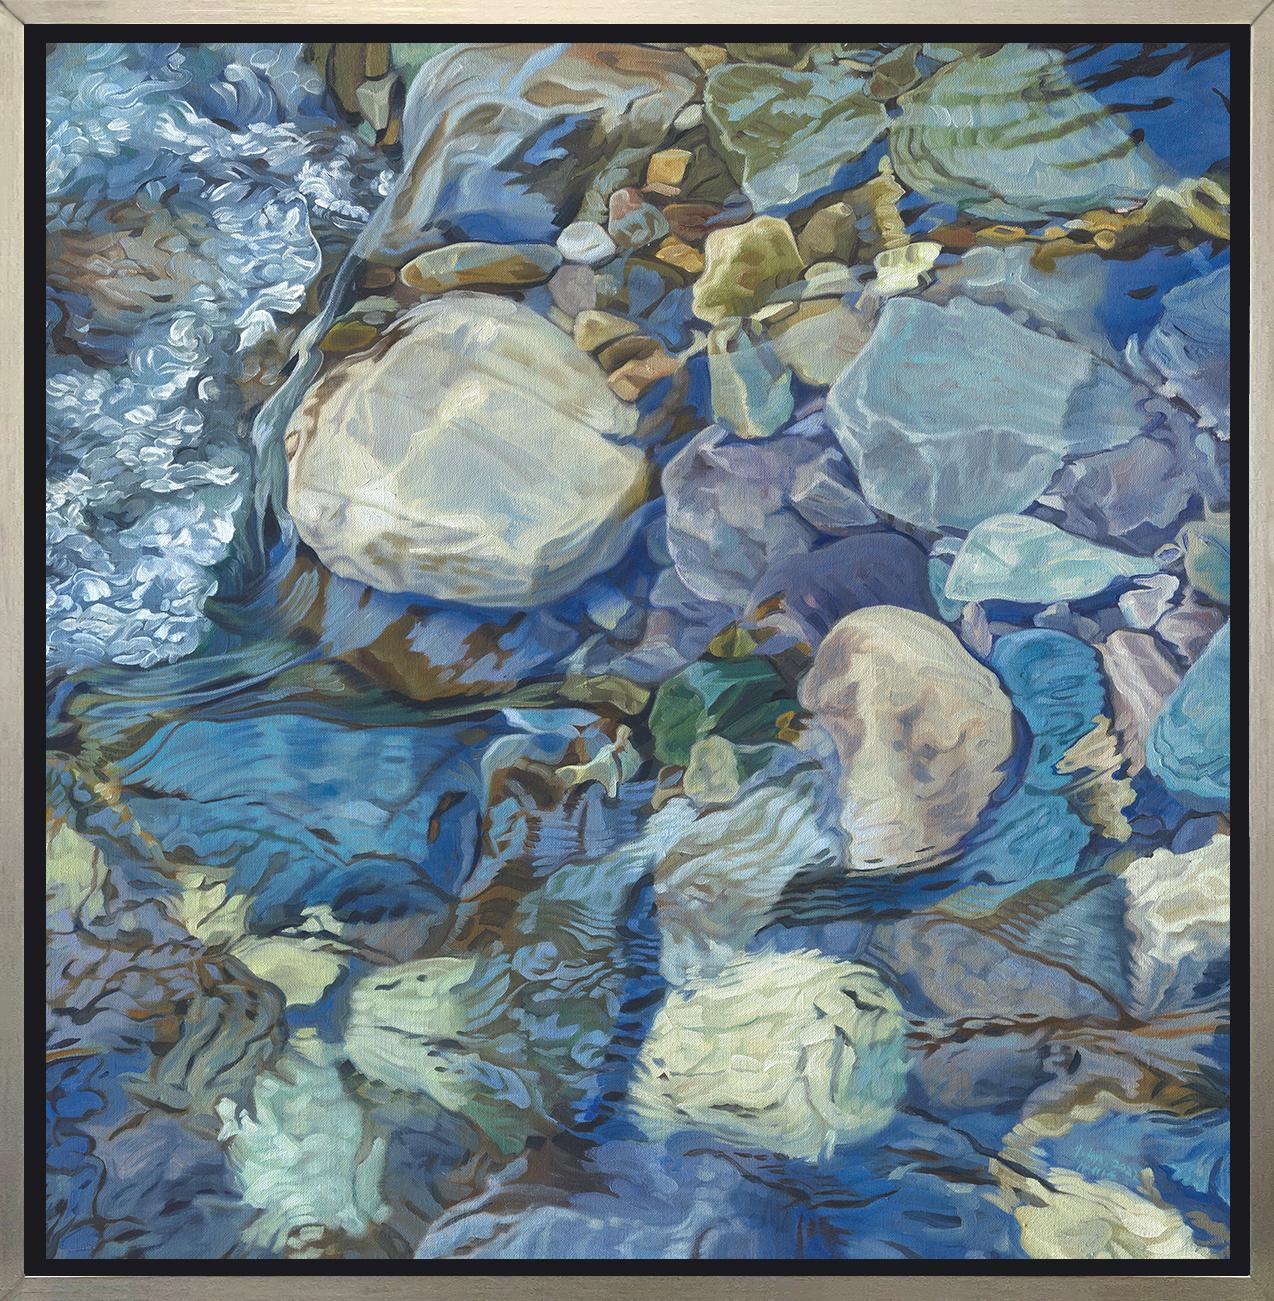 John Harris (painter) Landscape Print - "Rocky River 9, " Framed Limited Edition Giclee Print, 40" x 40"